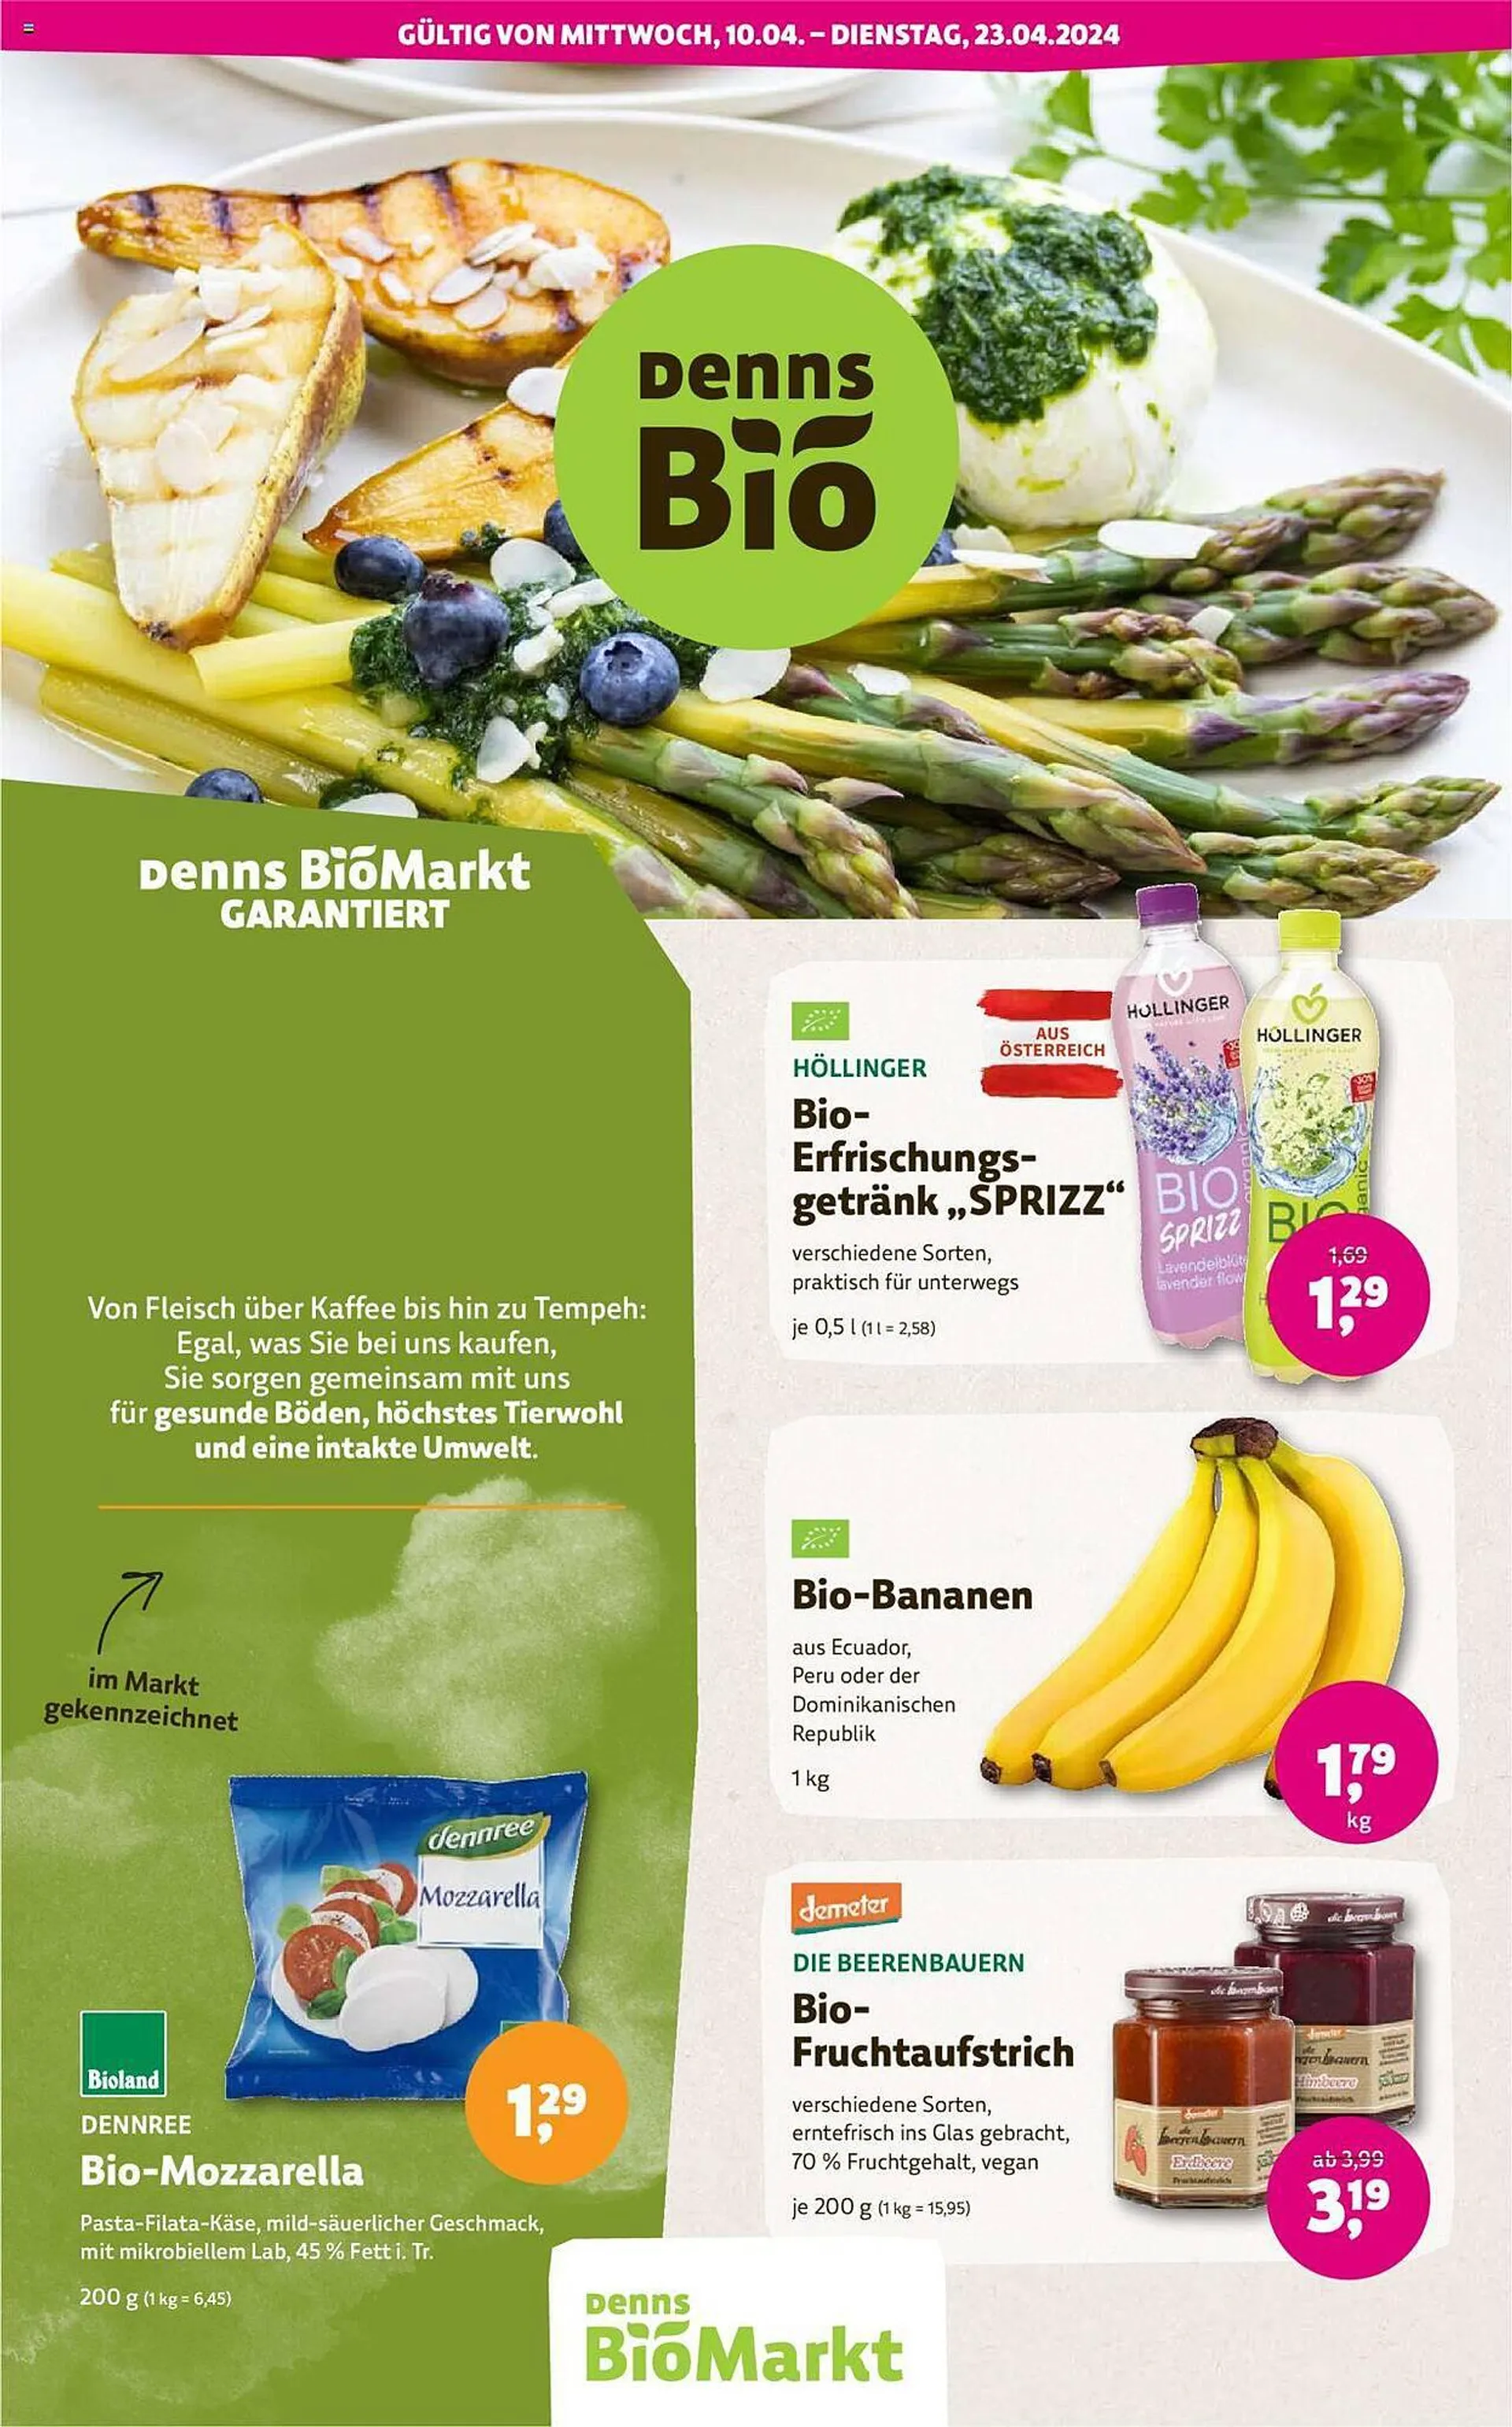 Denn's Biomarkt Flugblatt von 10. April bis 23. April 2024 - Flugblätt seite  